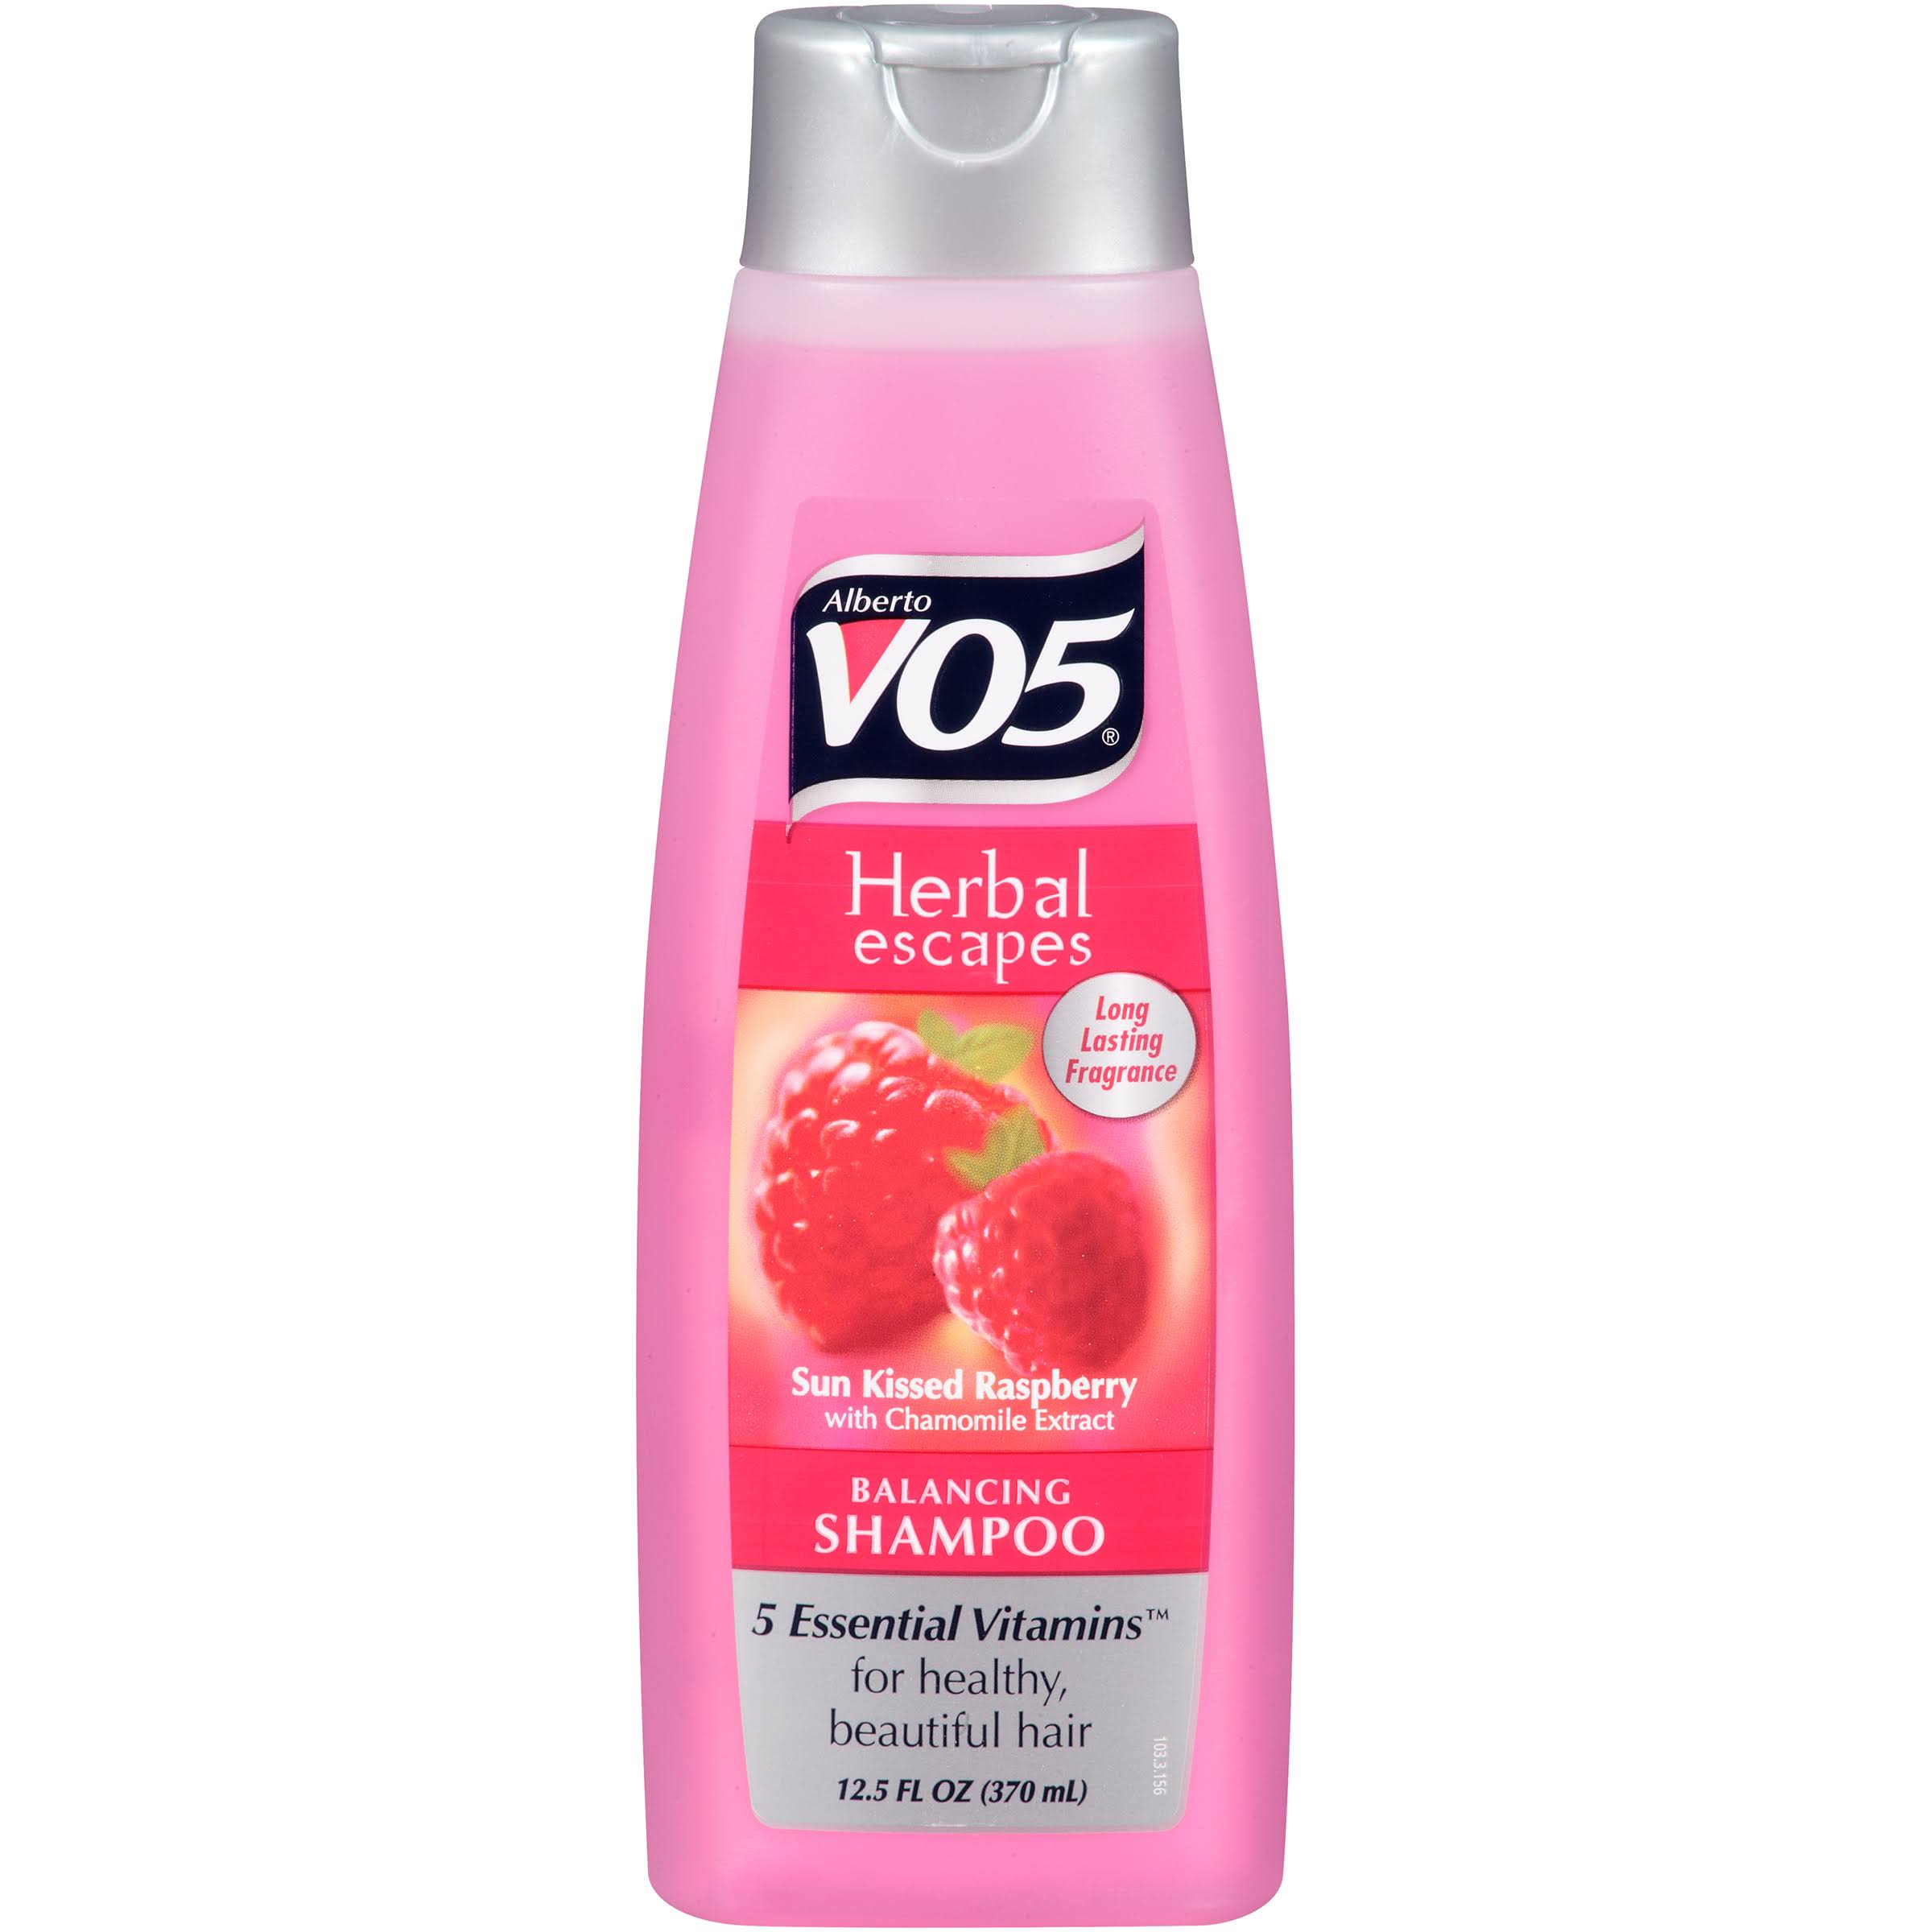 Alberto Vo5 Herbal Escapes Balancing Shampoo - Sun Kissed Raspberry, 370ml